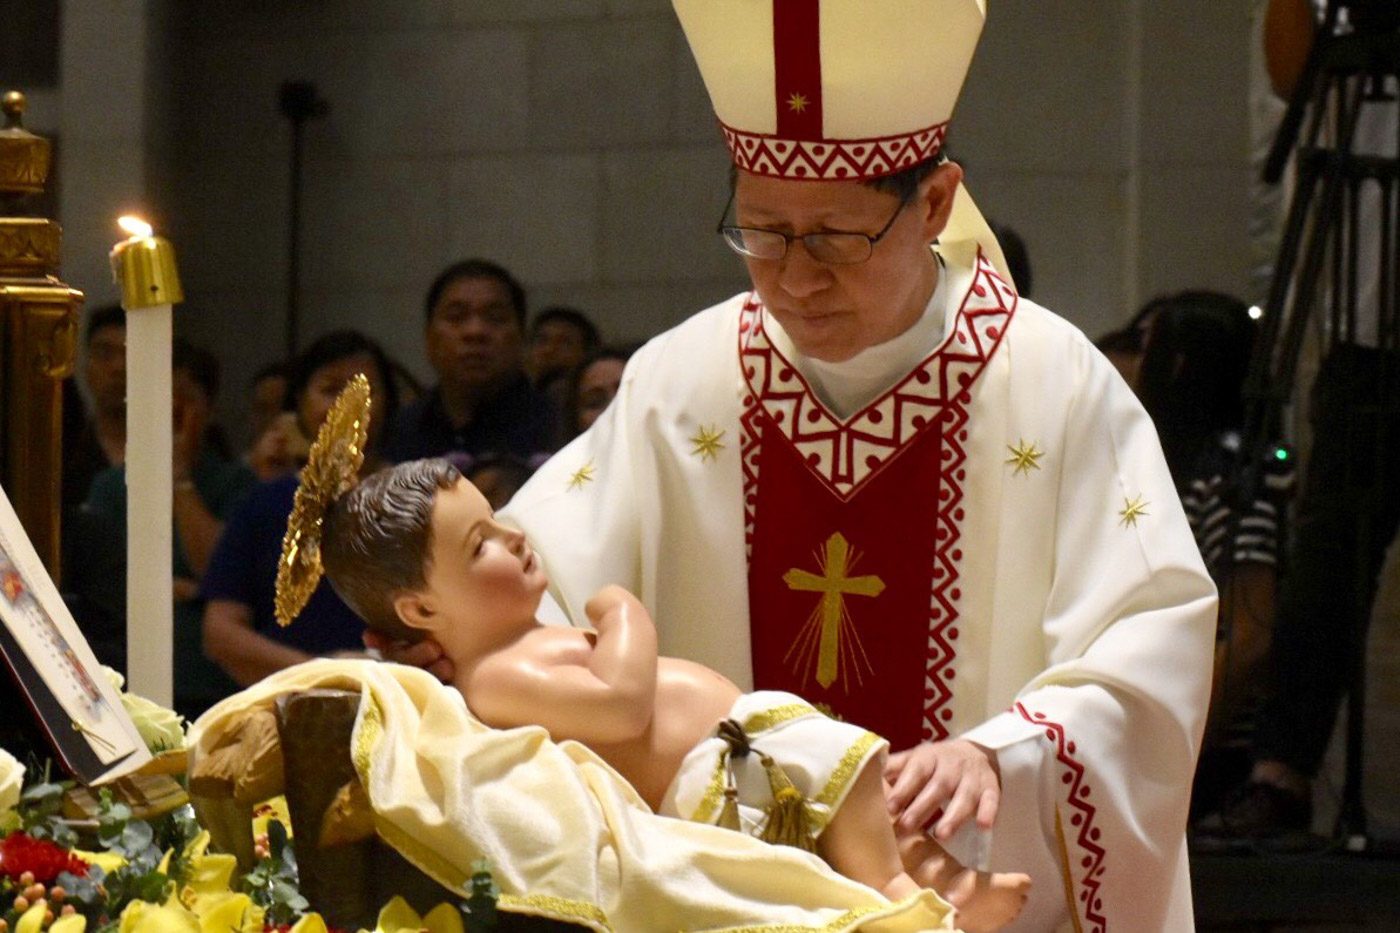 Cardinal Tagle urges youth to make ‘toxic’ world better